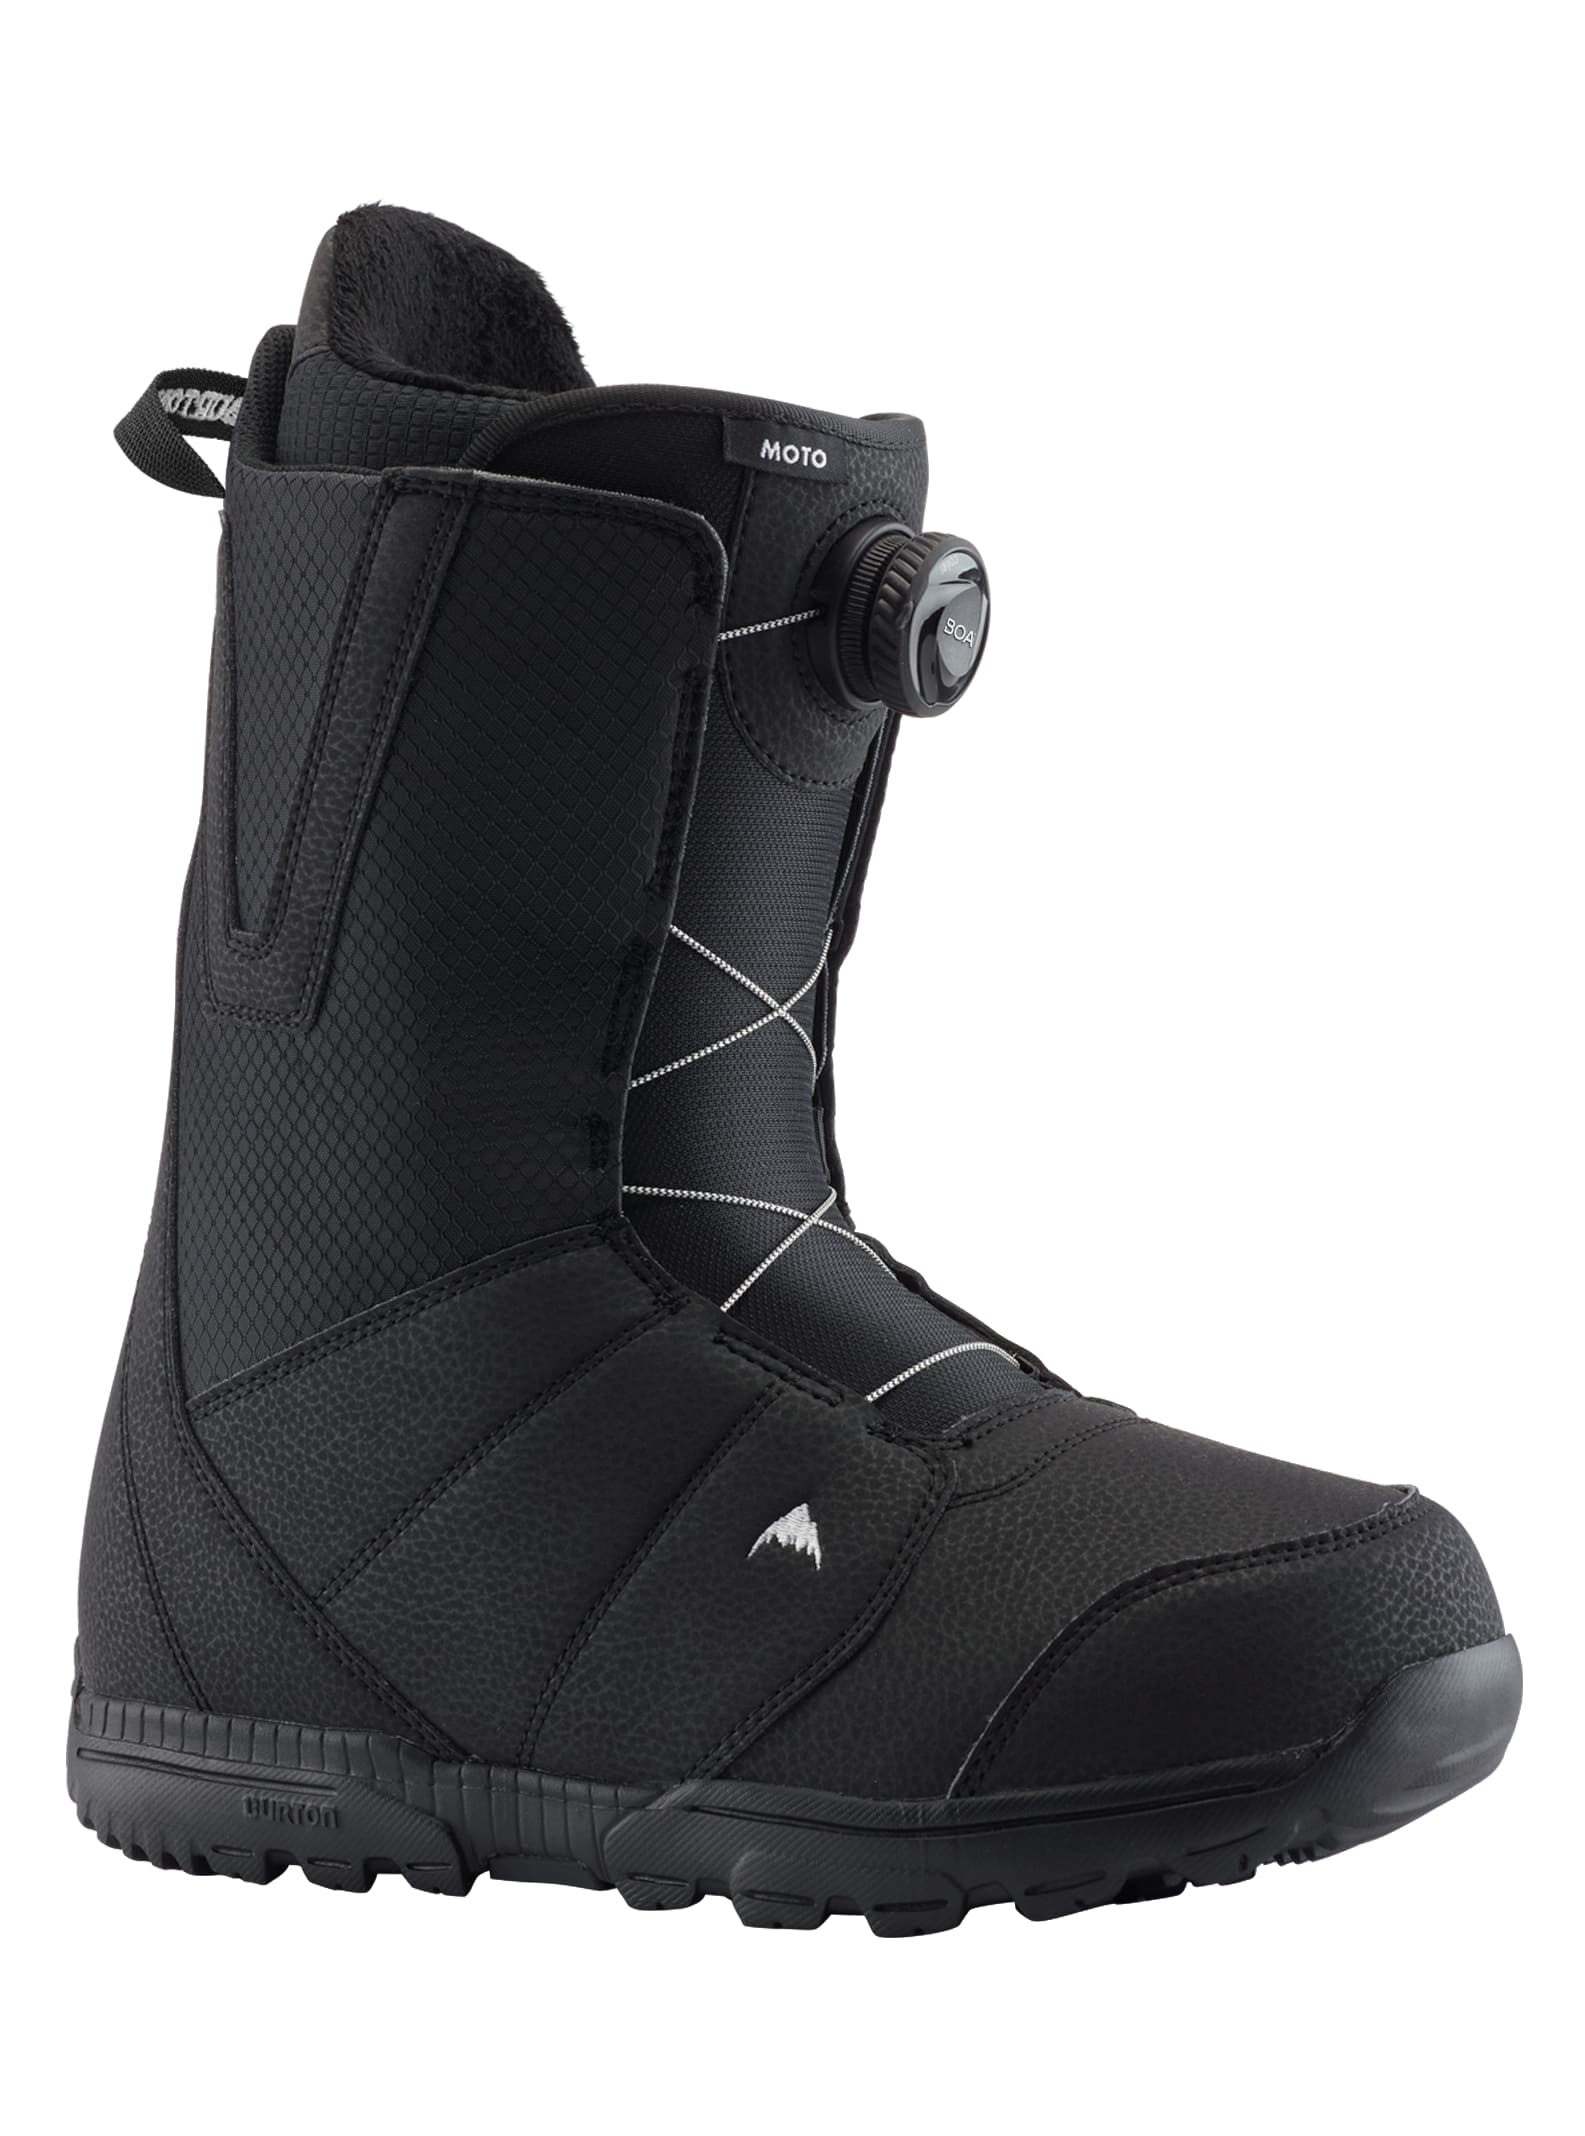 Burton - Boots de snowboard Moto Boa® homme, Black, 10